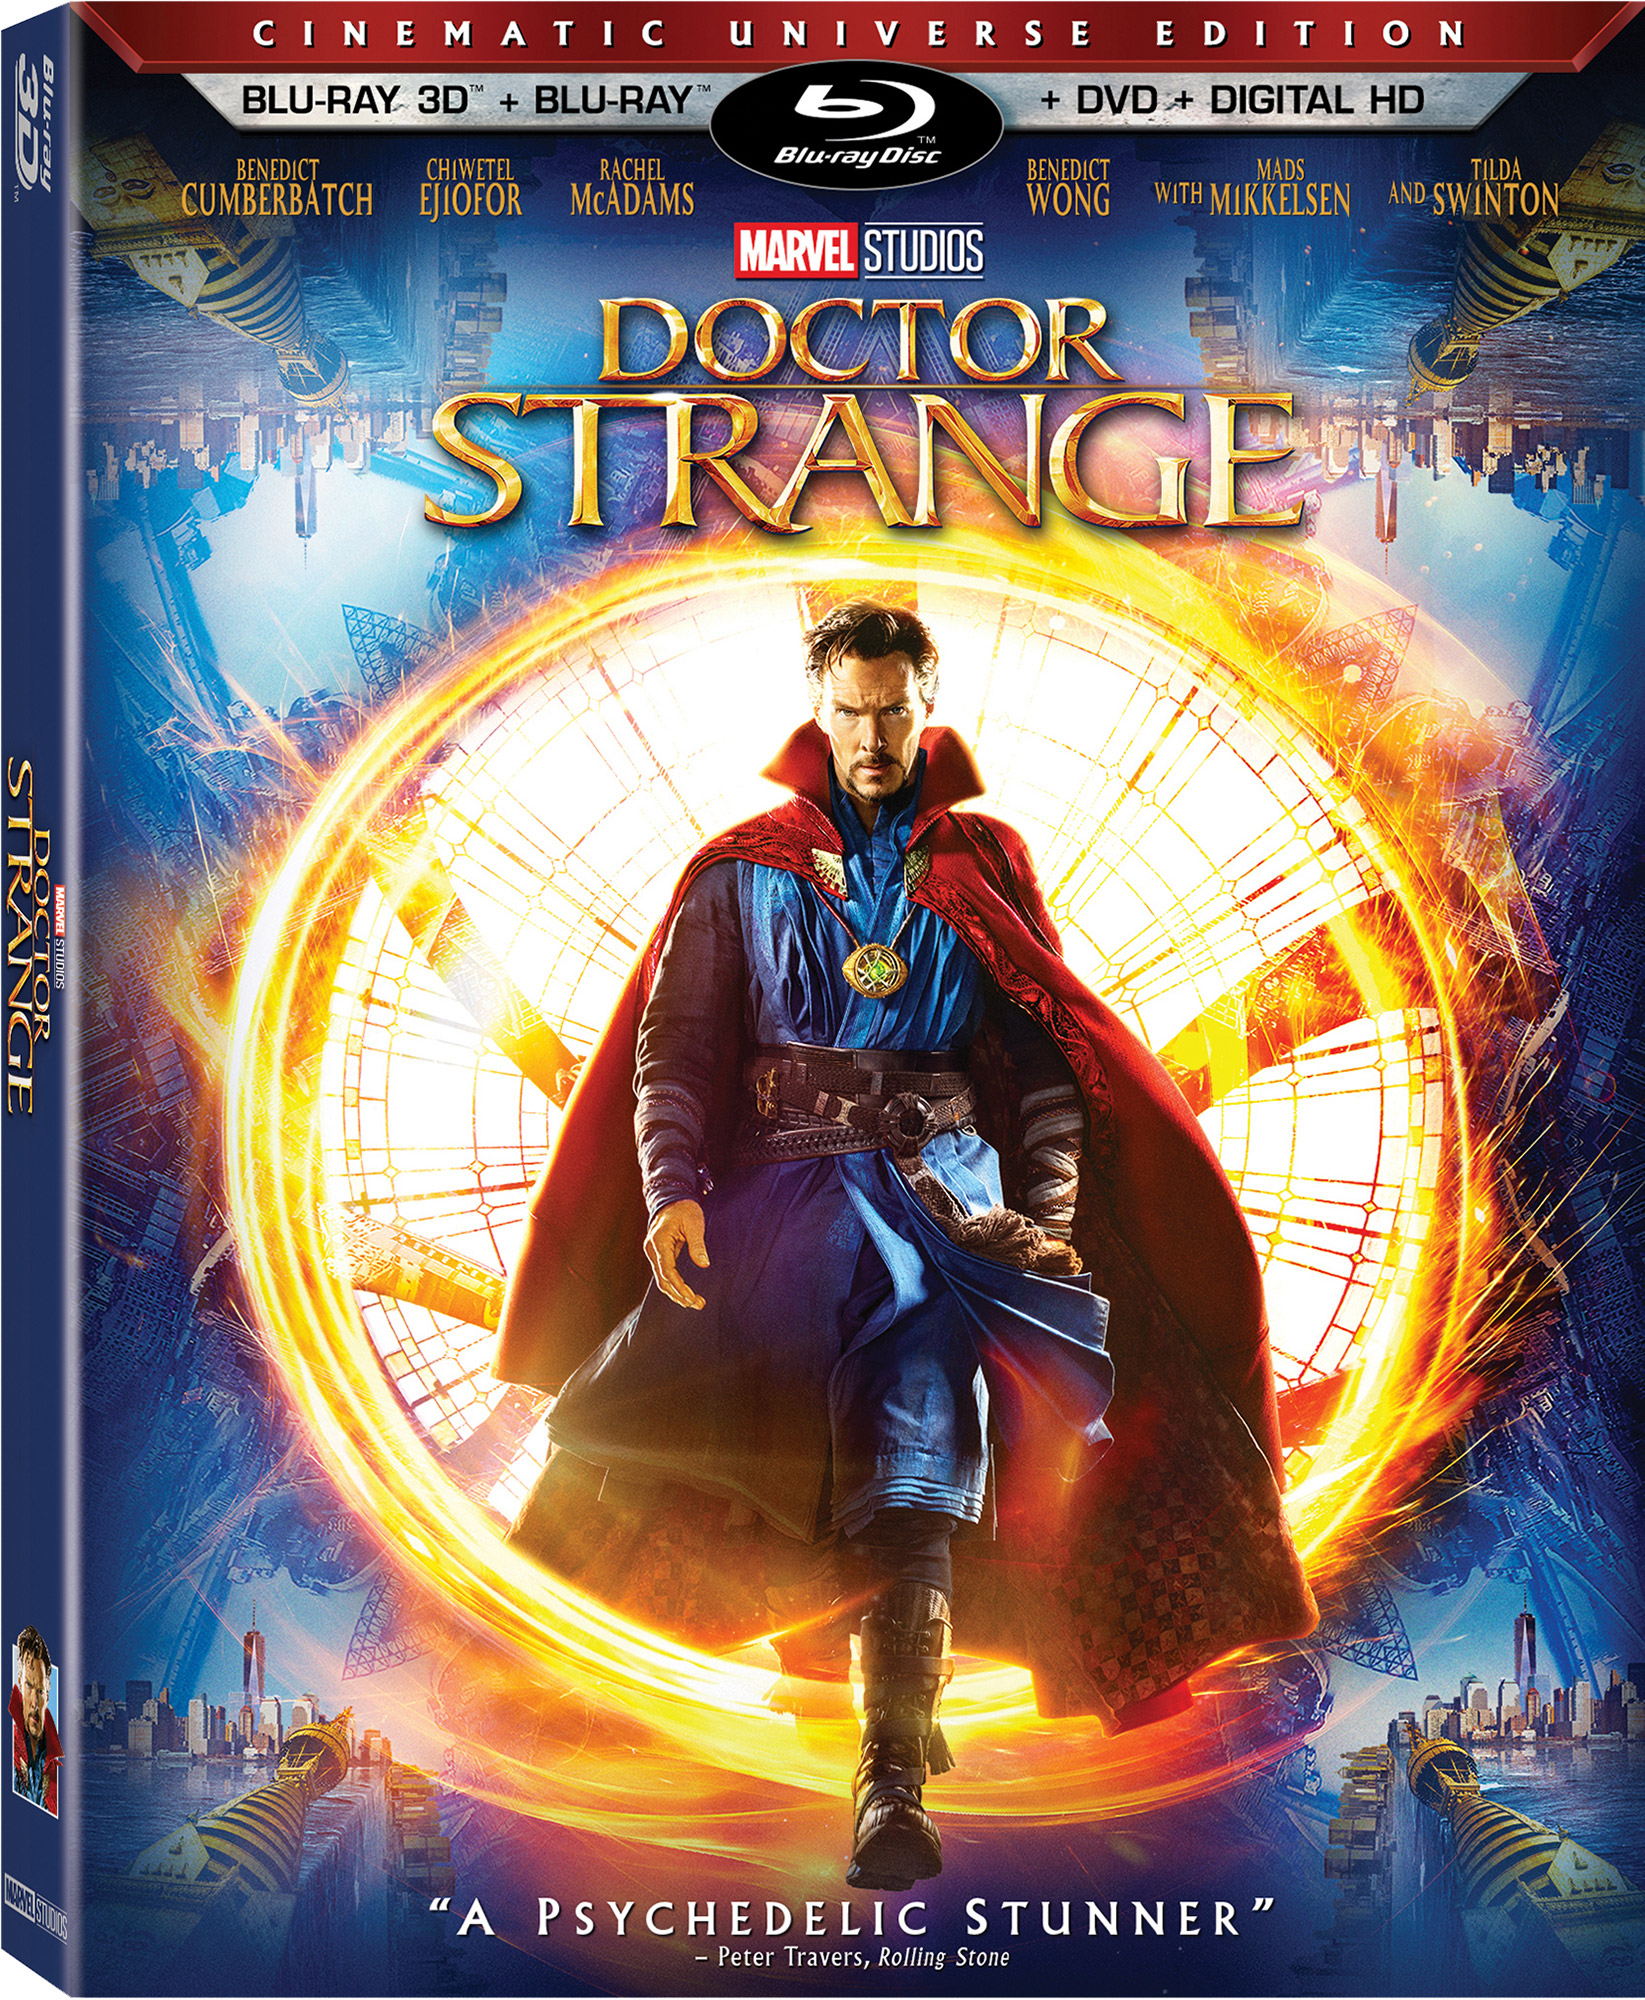 Doctor Strange Blu Ray Review Doctor Strange 2016 Flickdirect